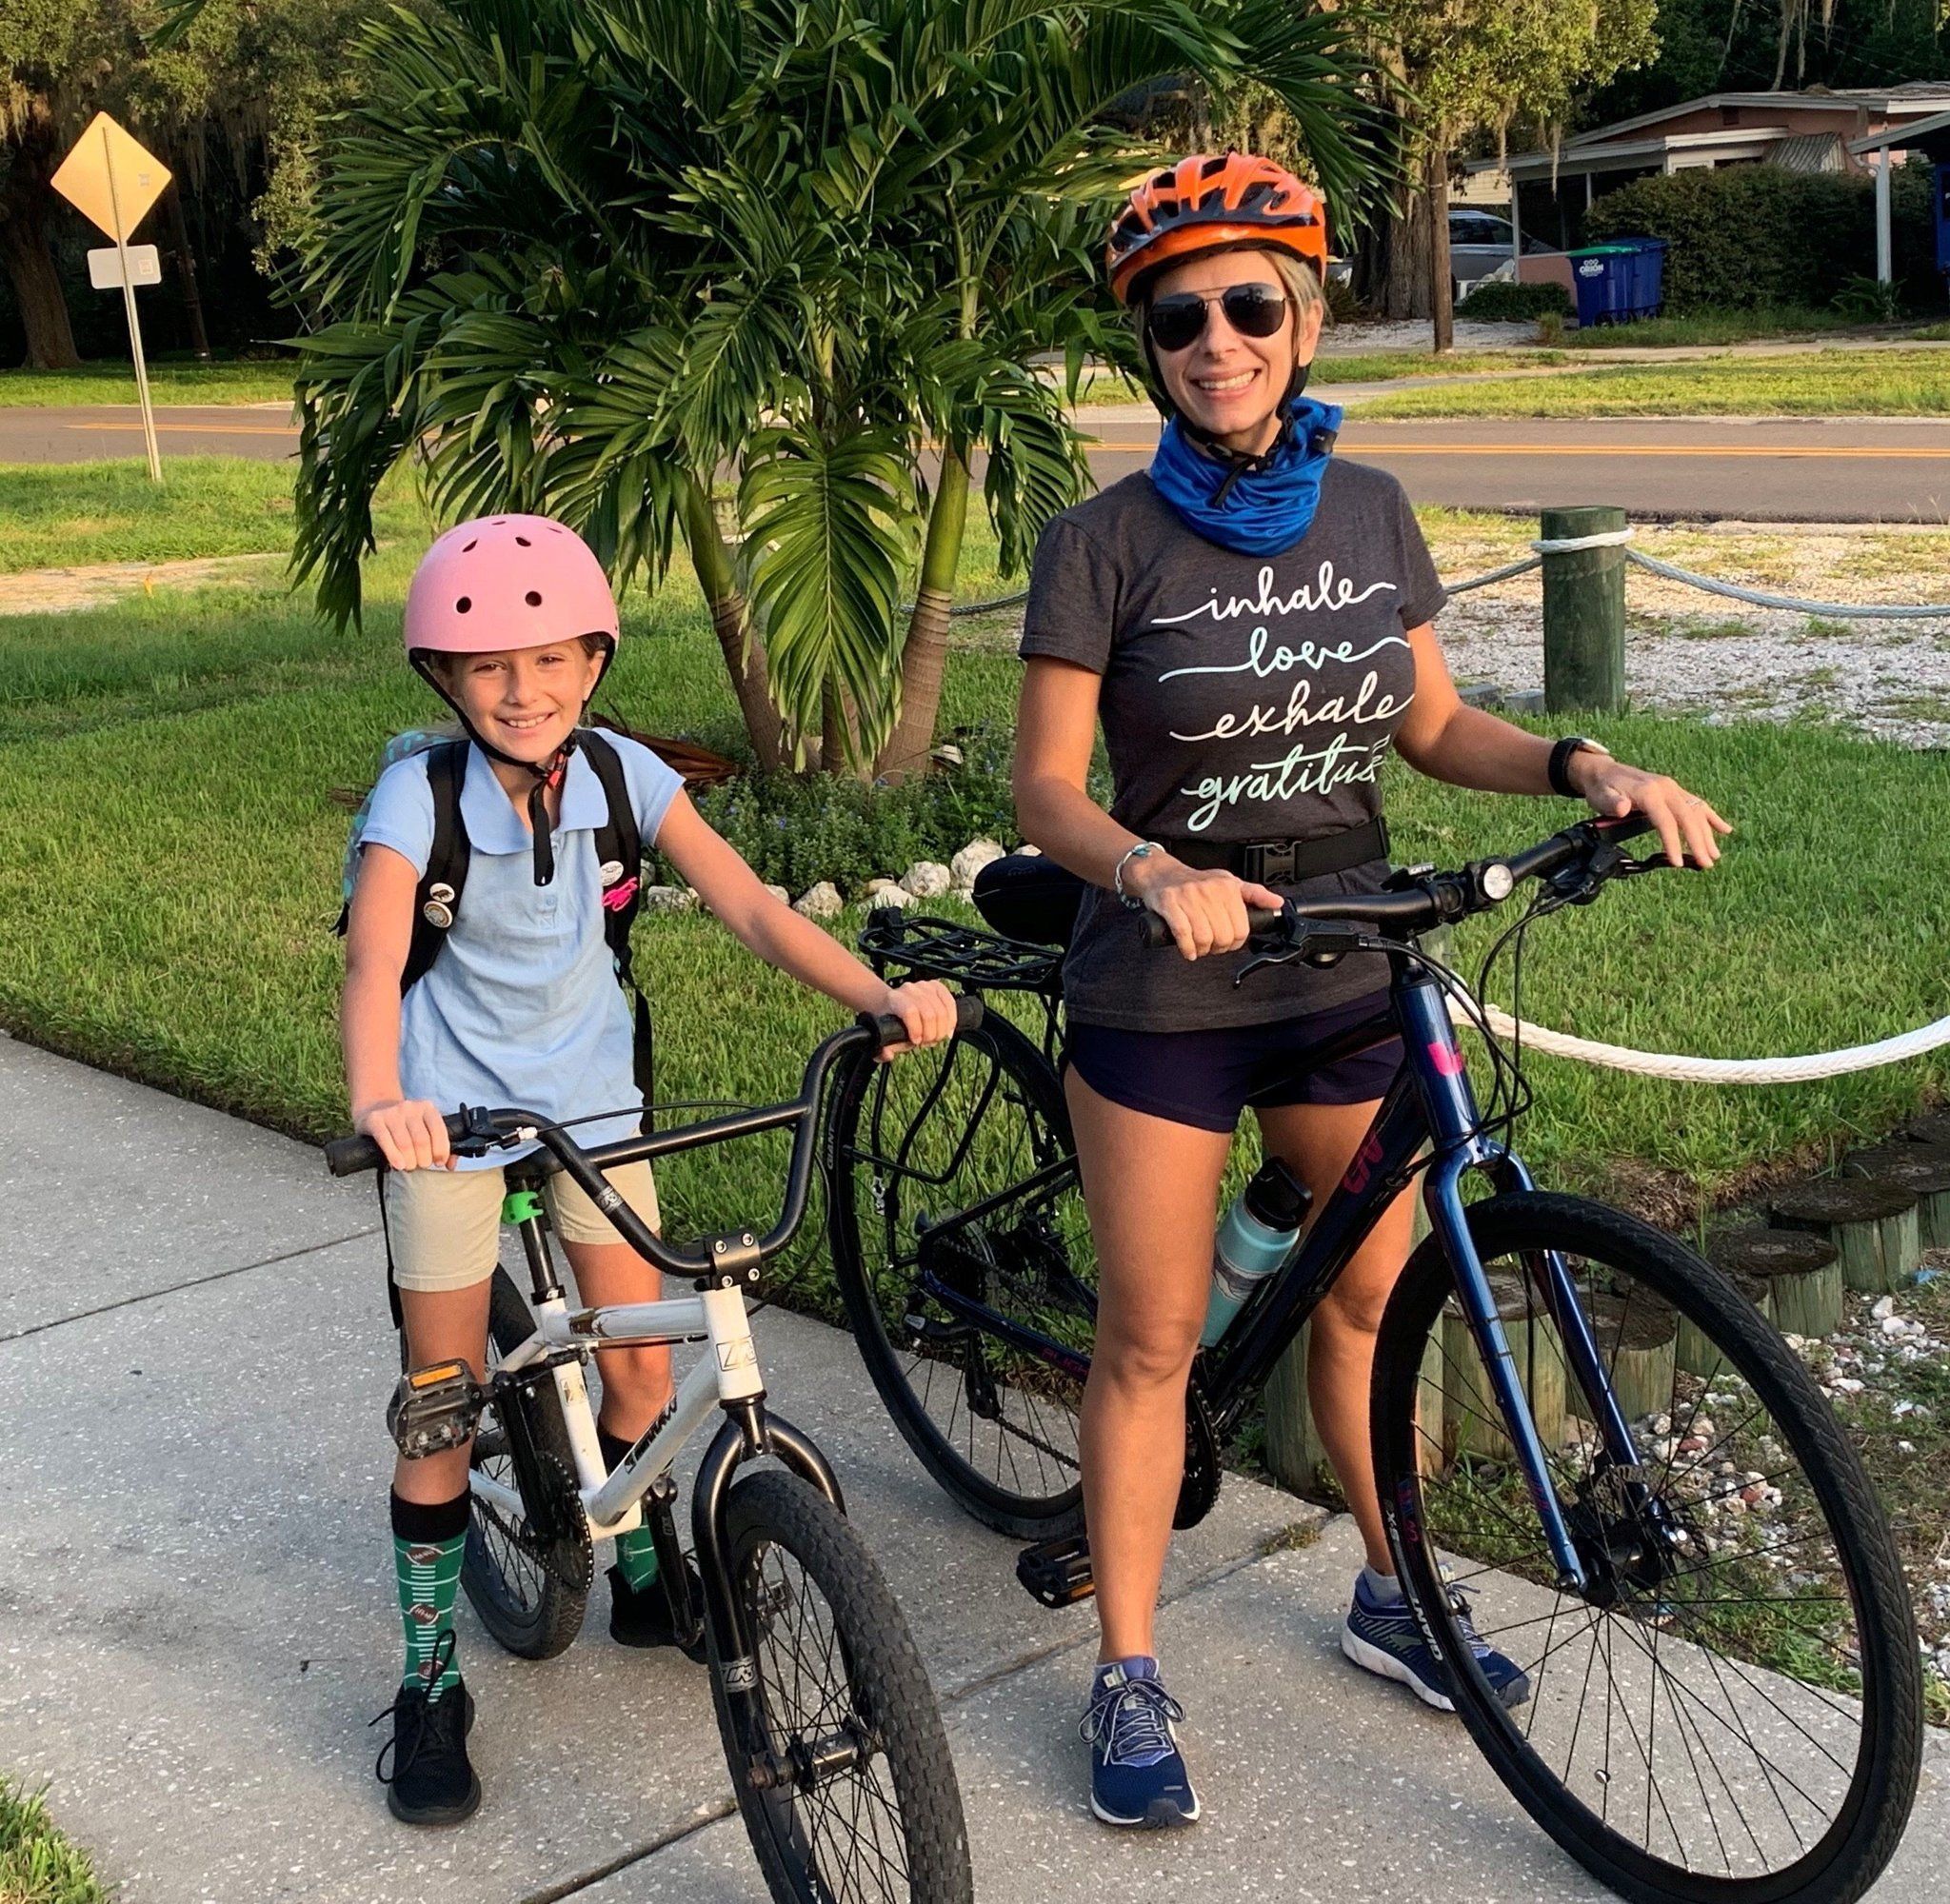 Angela and child on bikes